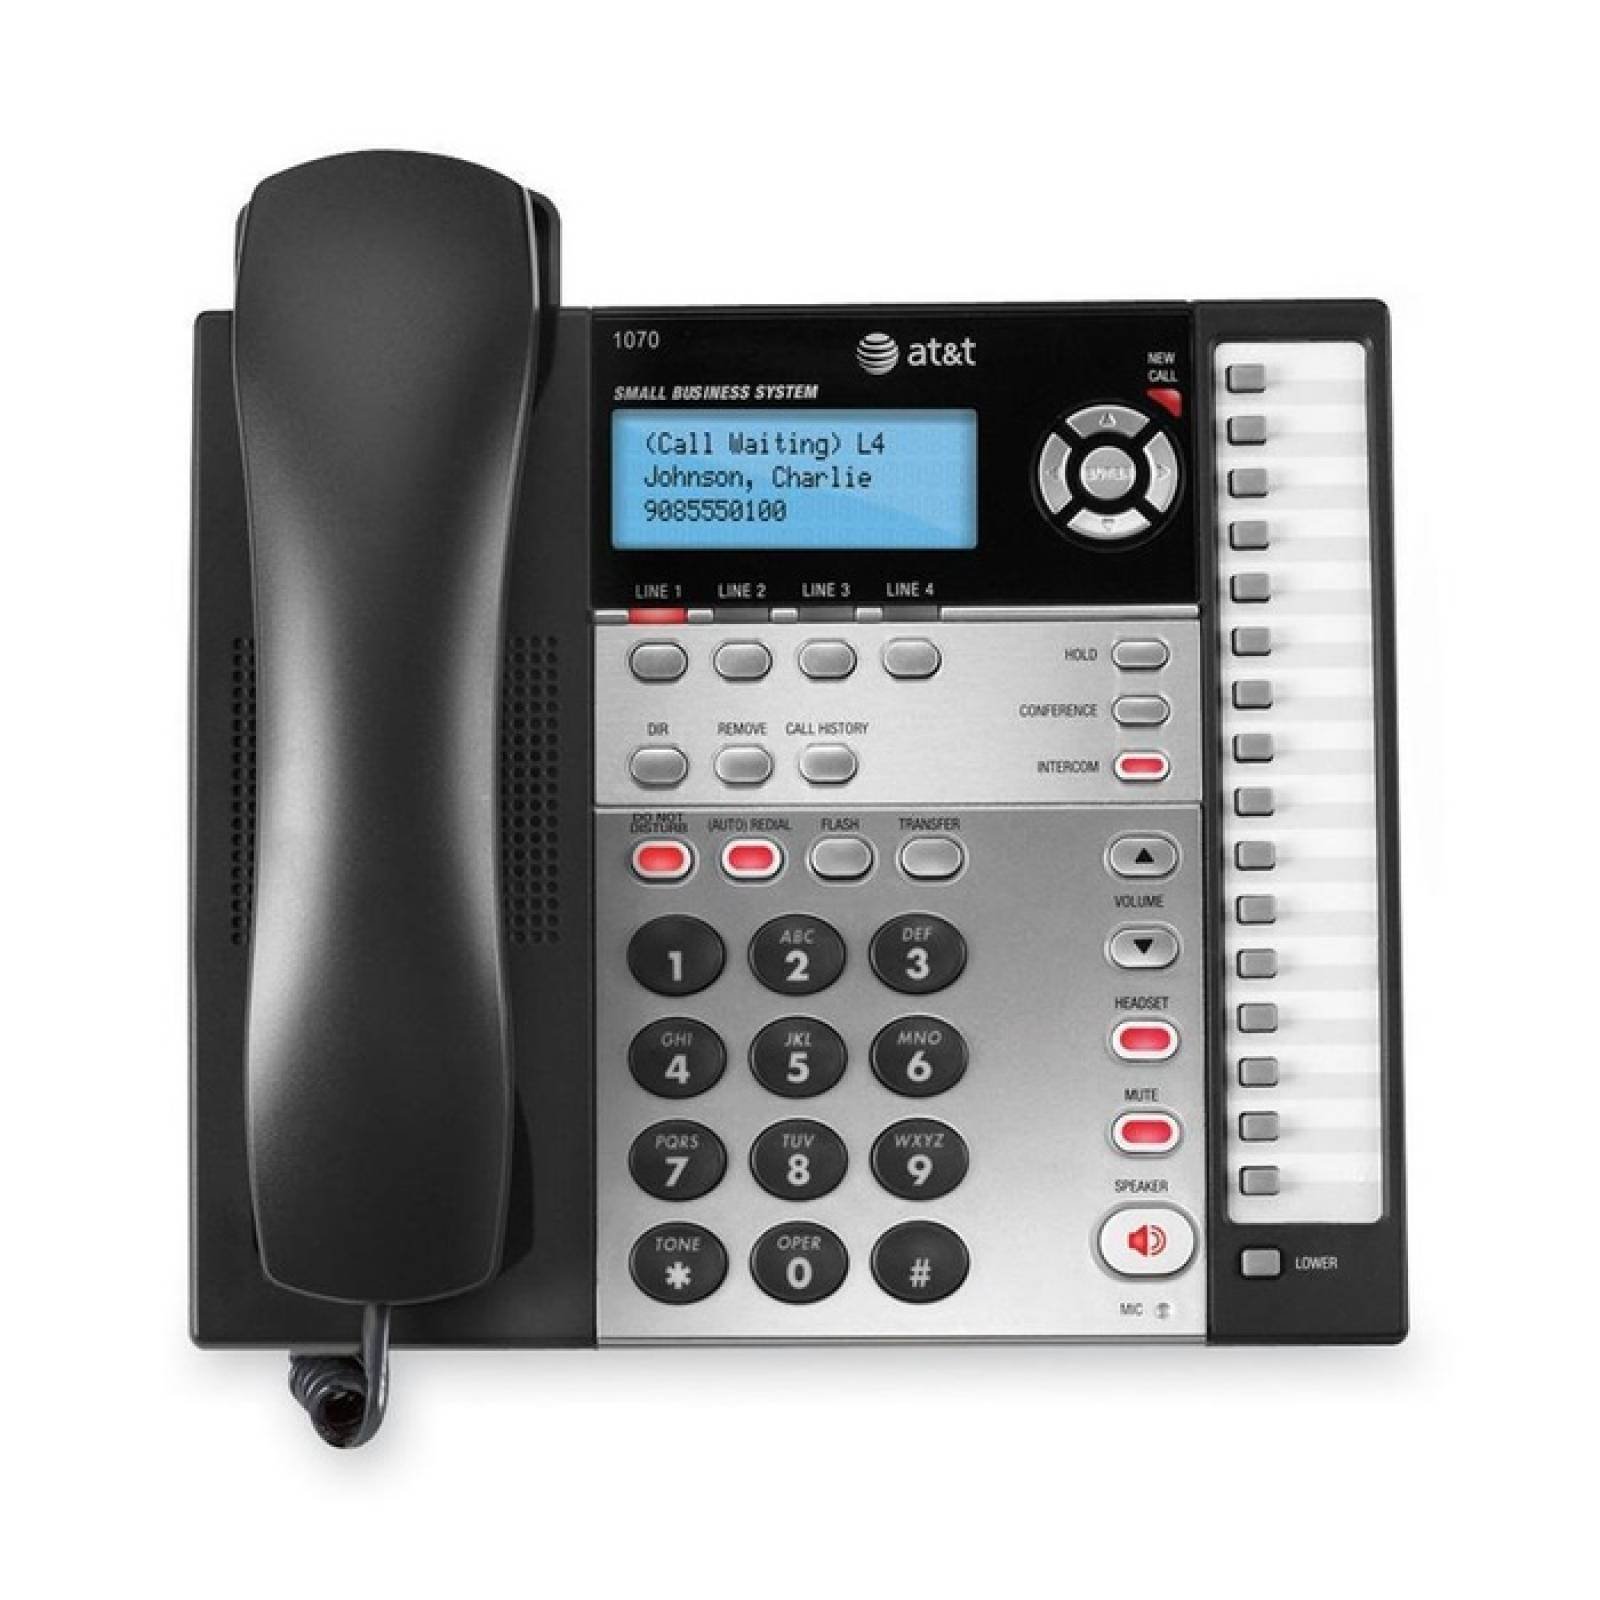 ATampT 1070 Telfono para pequeas empresas con cable y expandible de 4 lneas con identificador de llamadas